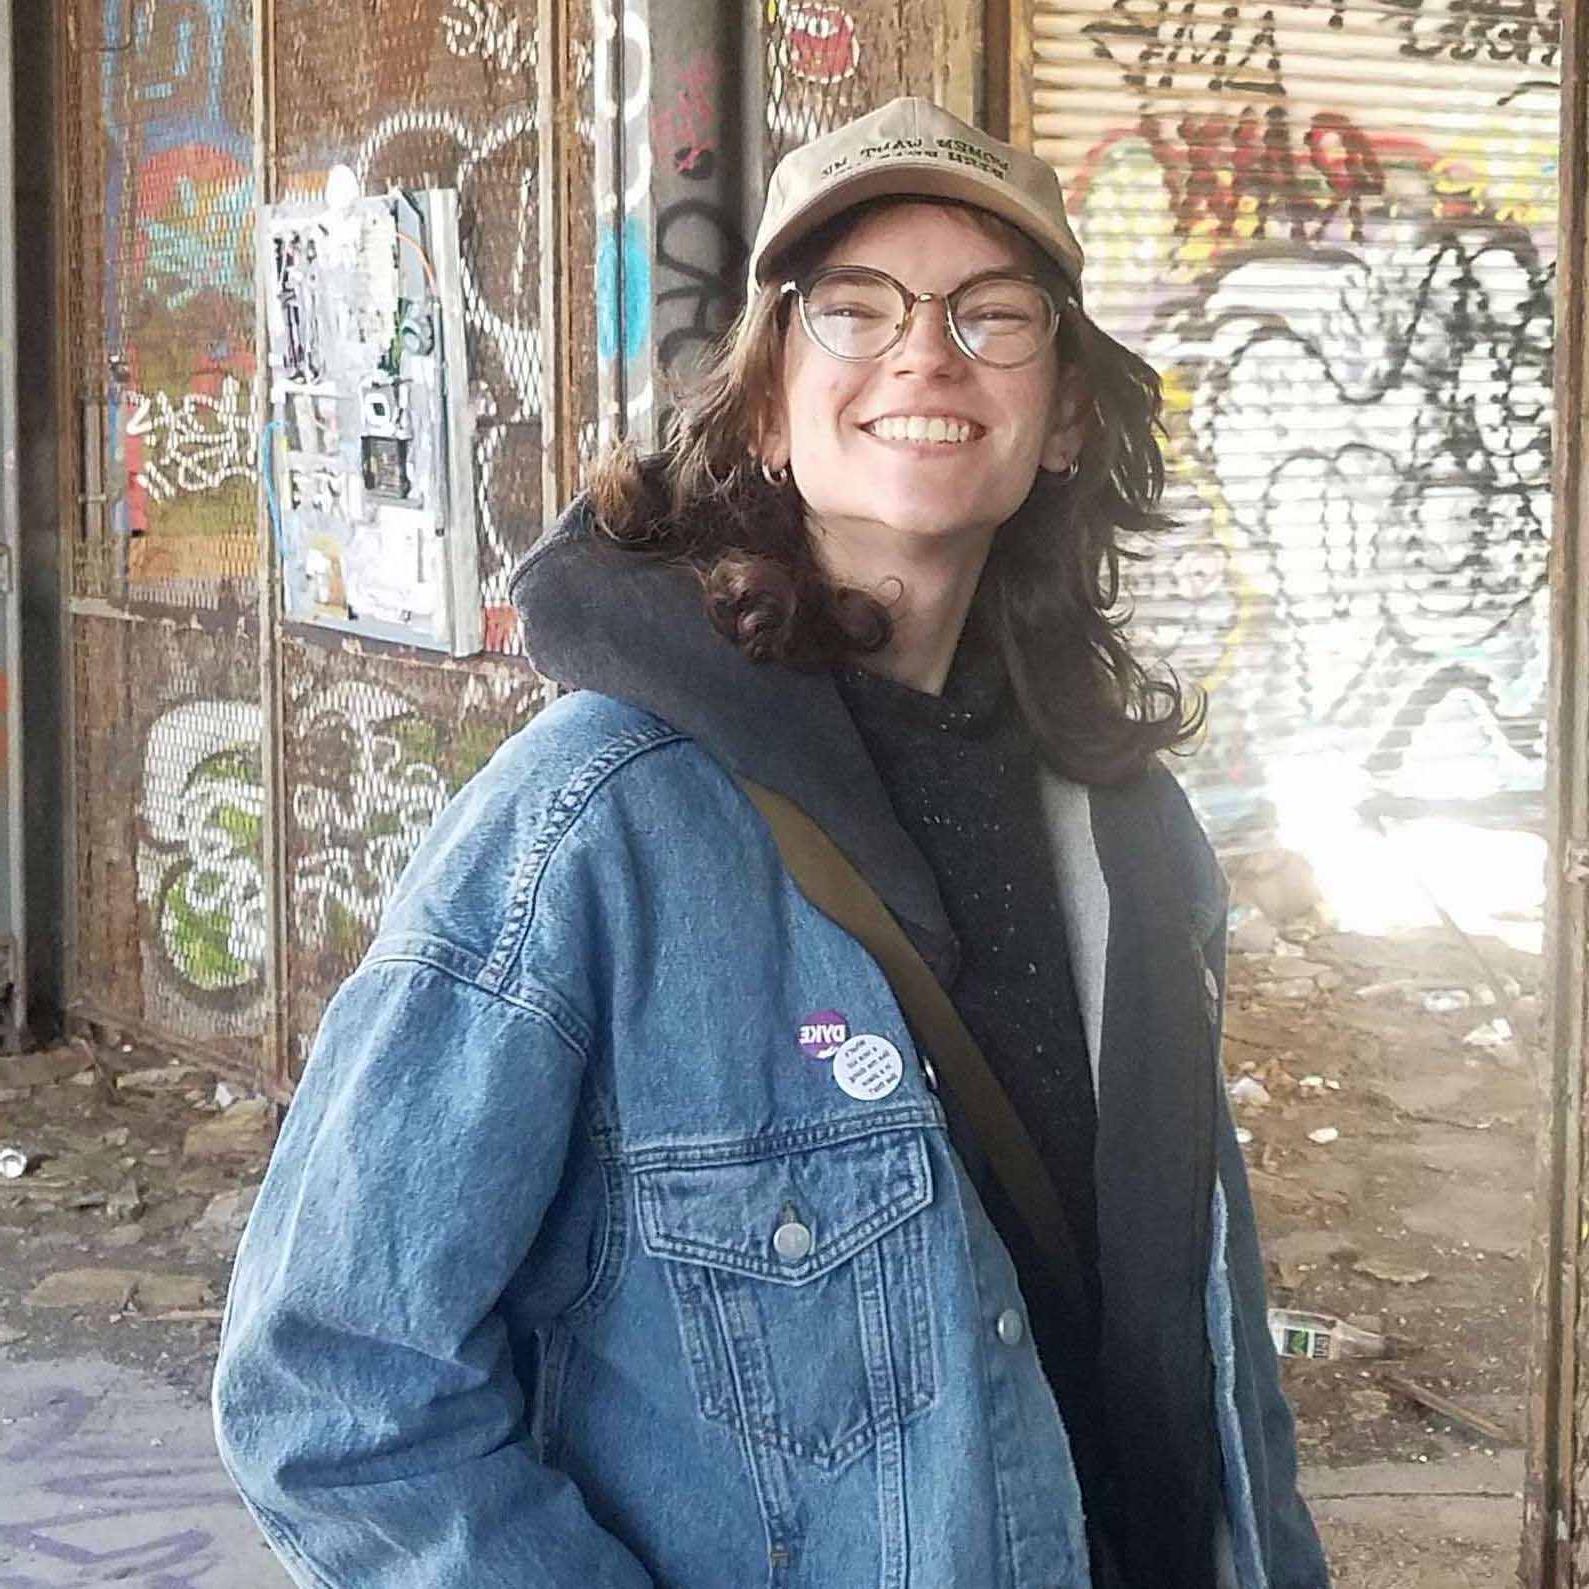 Tori smiles in a jean jacket before a graffiti wall